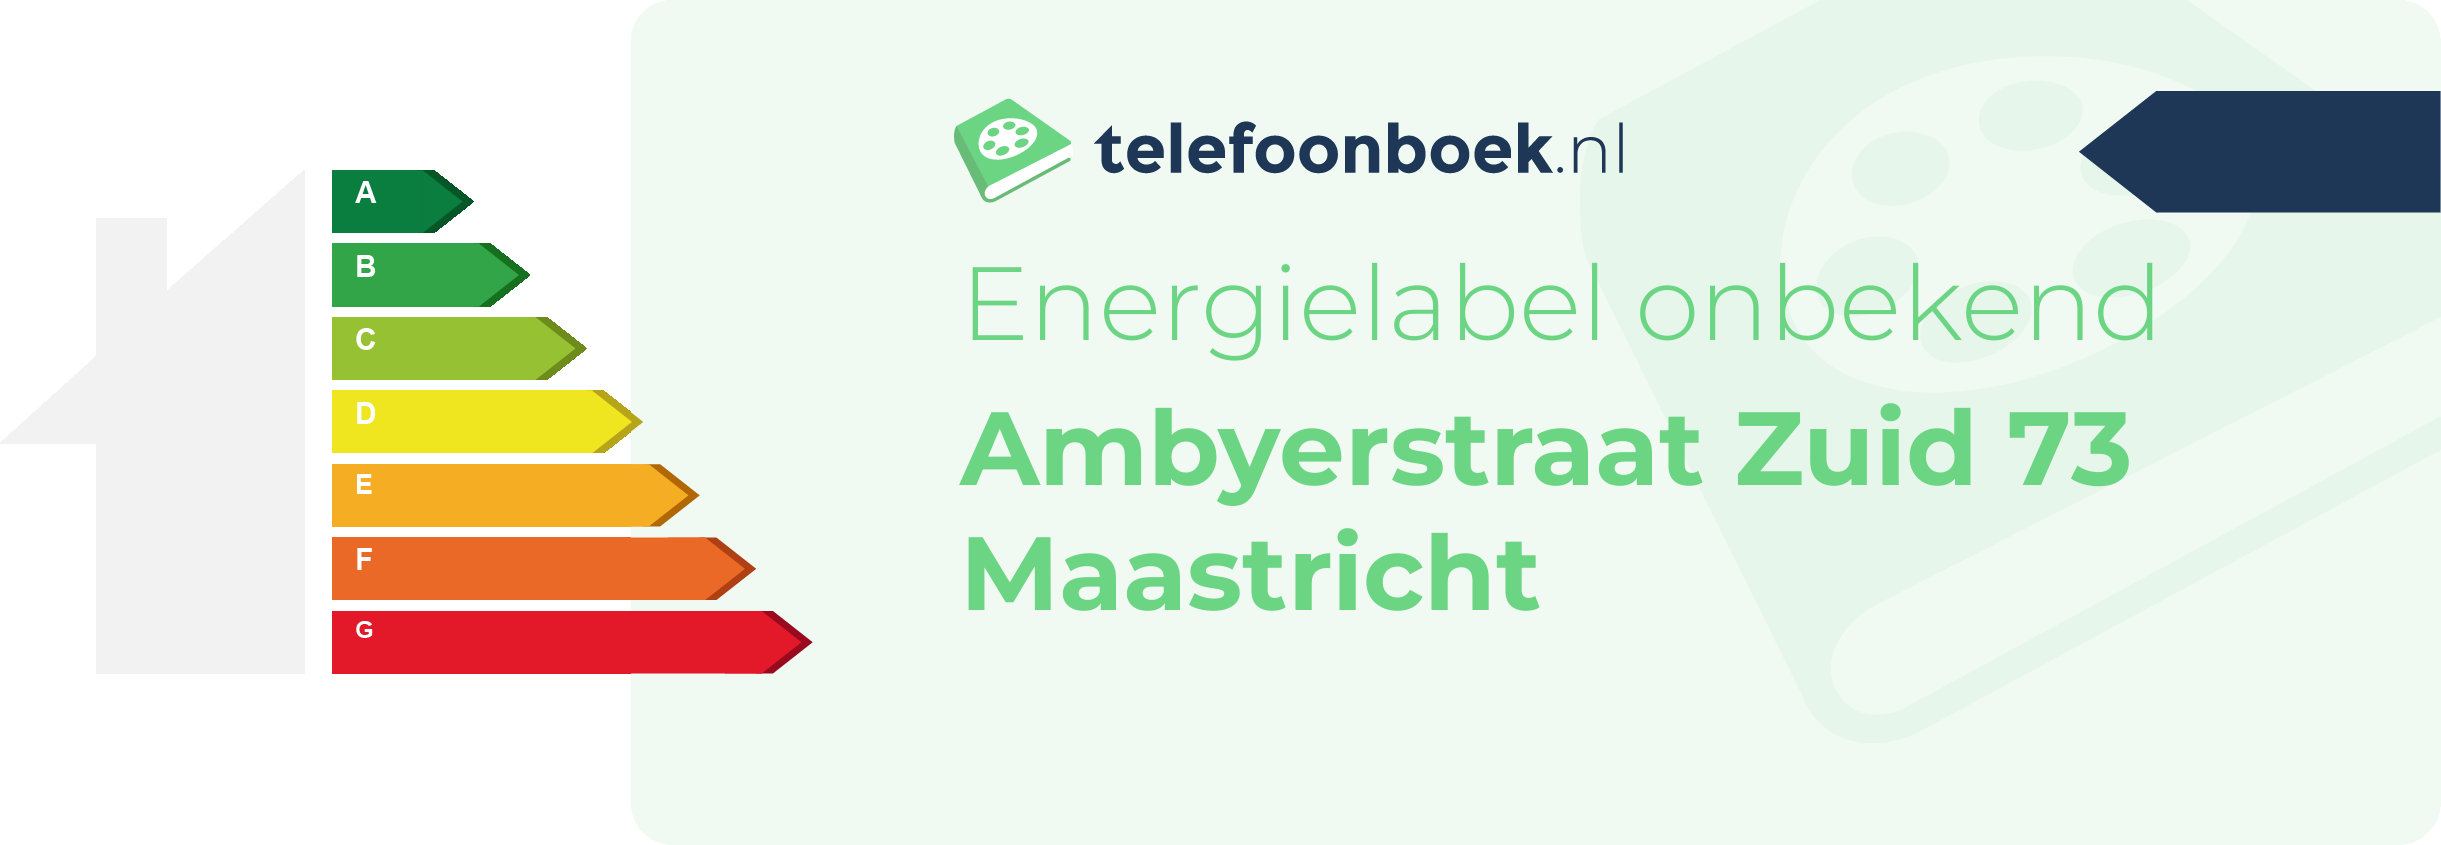 Energielabel Ambyerstraat Zuid 73 Maastricht